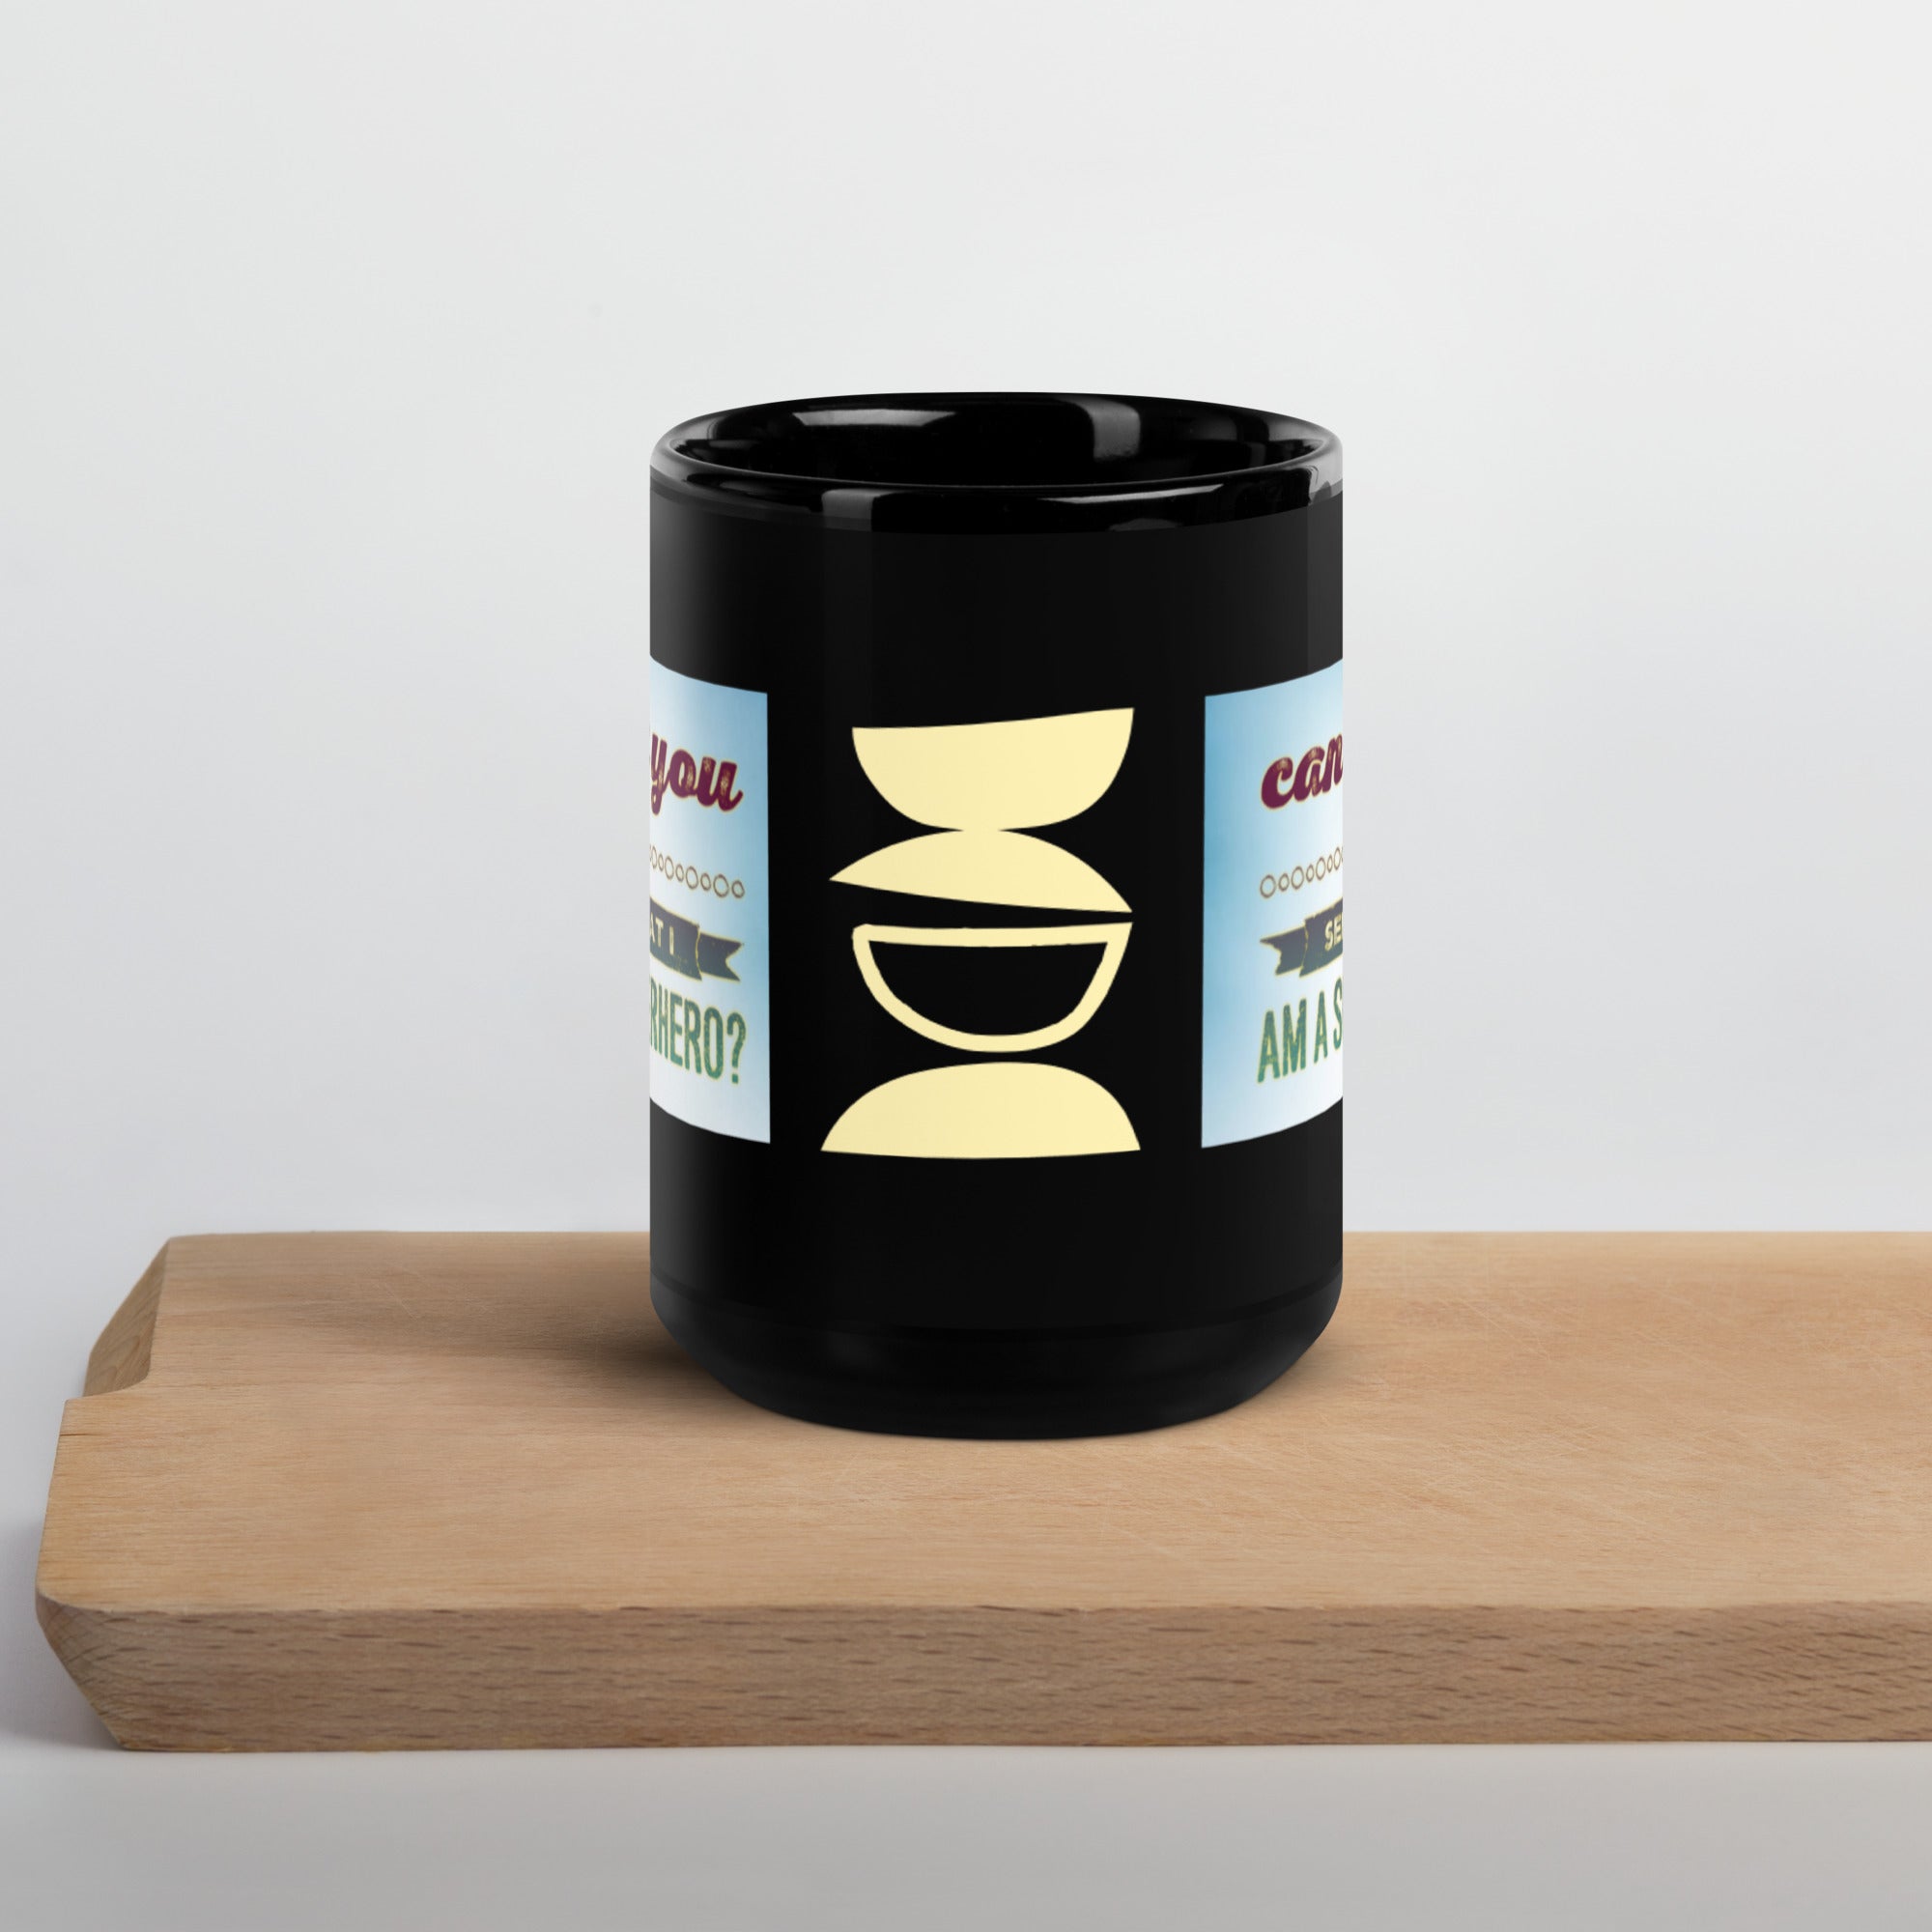 GloWell Designs - Black Glossy Mug - Affirmation Quote - I Am A Superhero - GloWell Designs